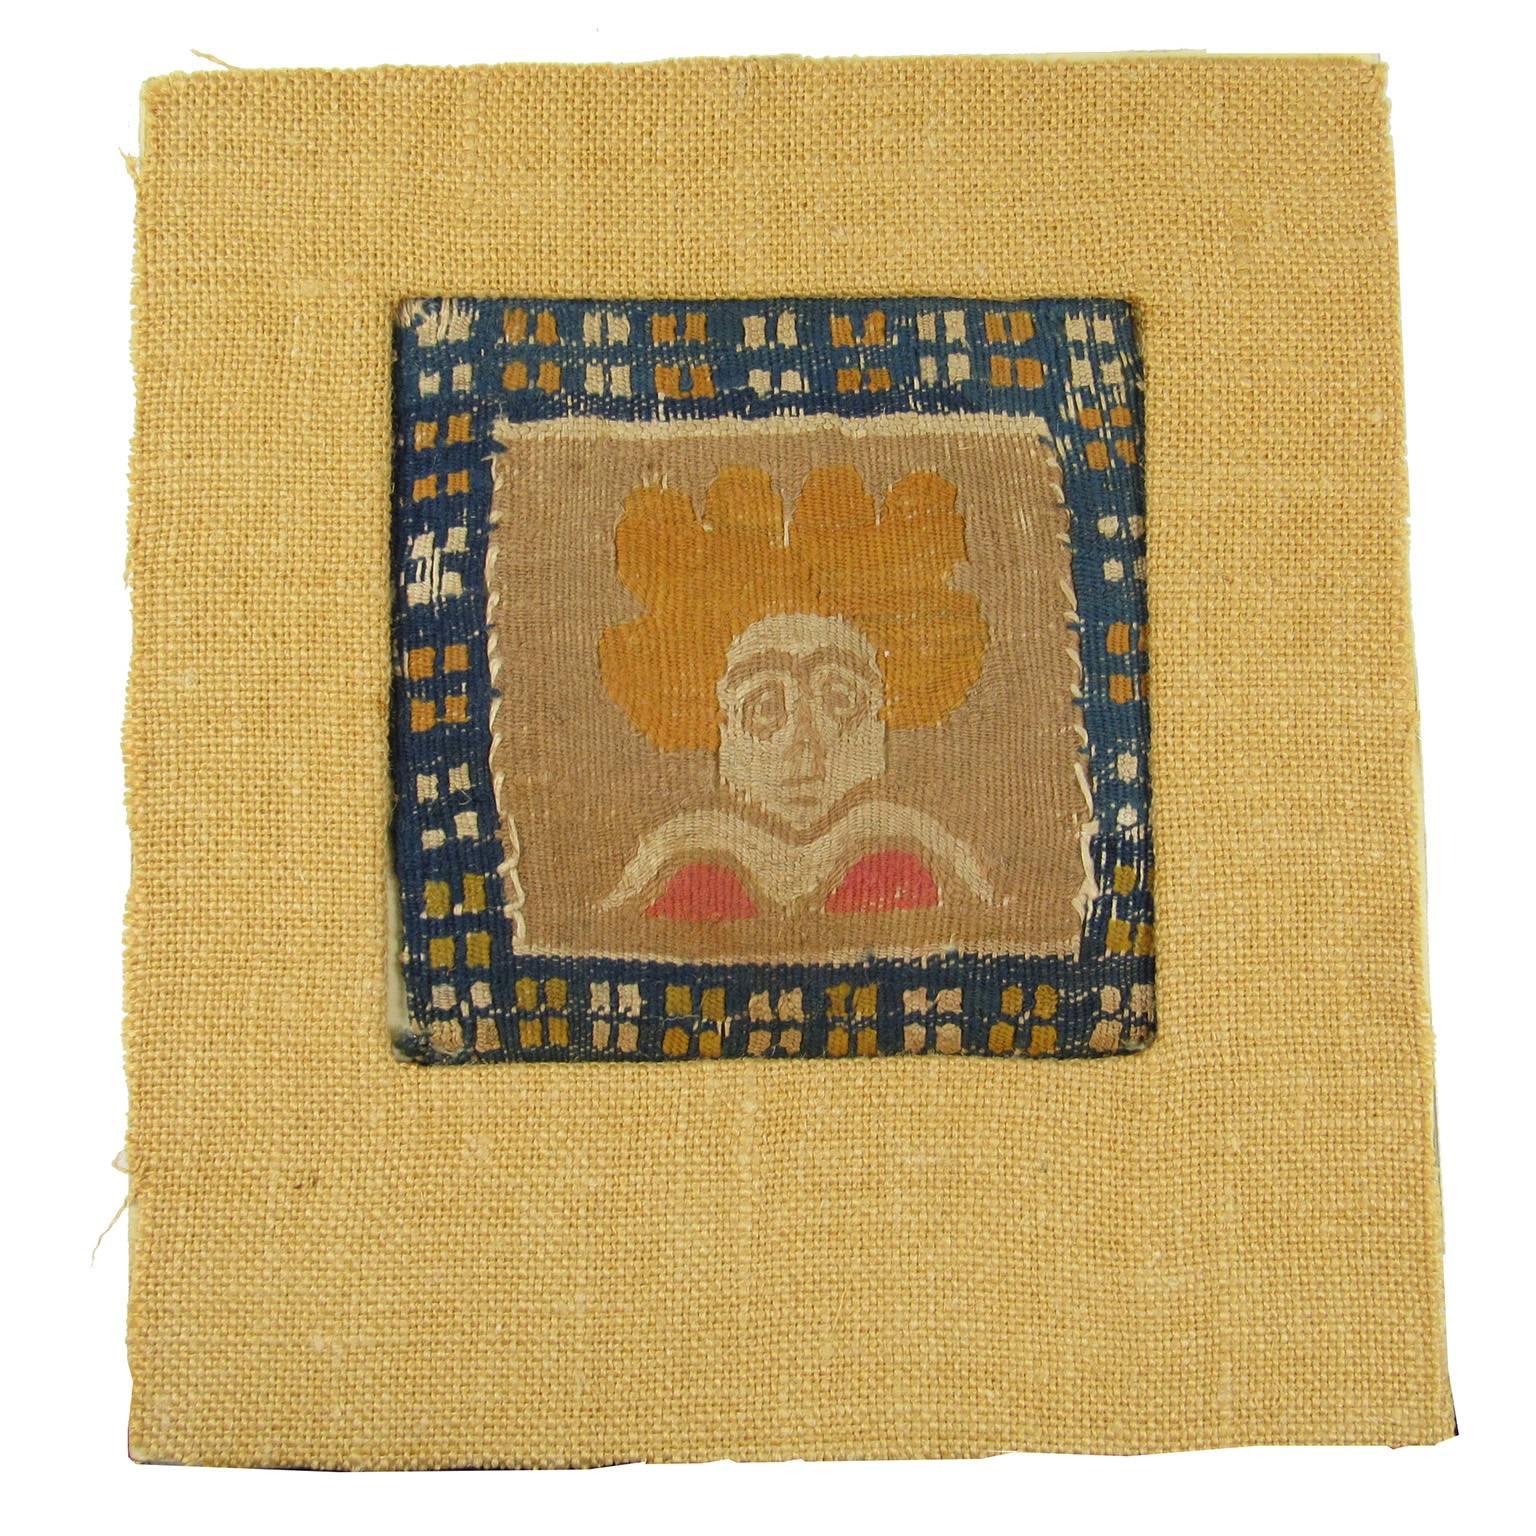 Needlework Ancient Egyptian Coptic Textile Fragment Portrait of a Woman